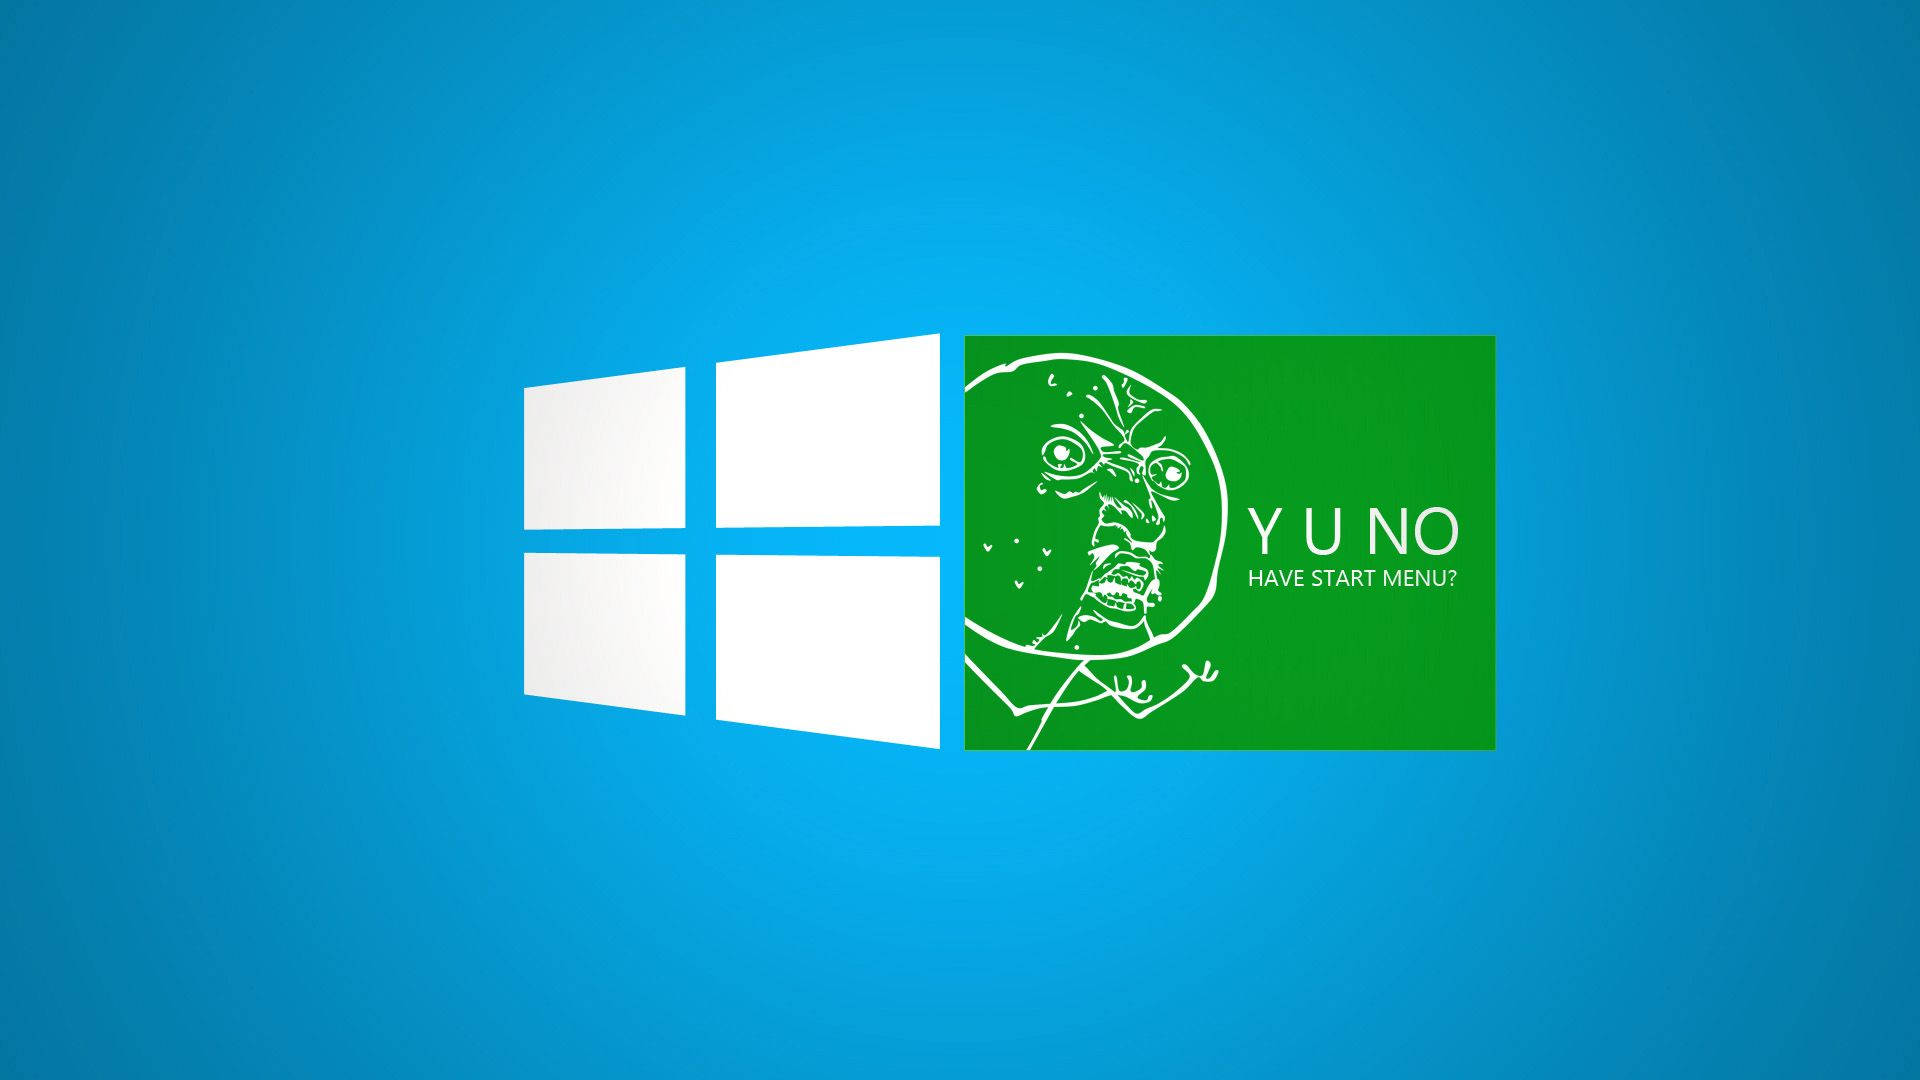 Windows 10 Y U No Guy Dank Meme Background